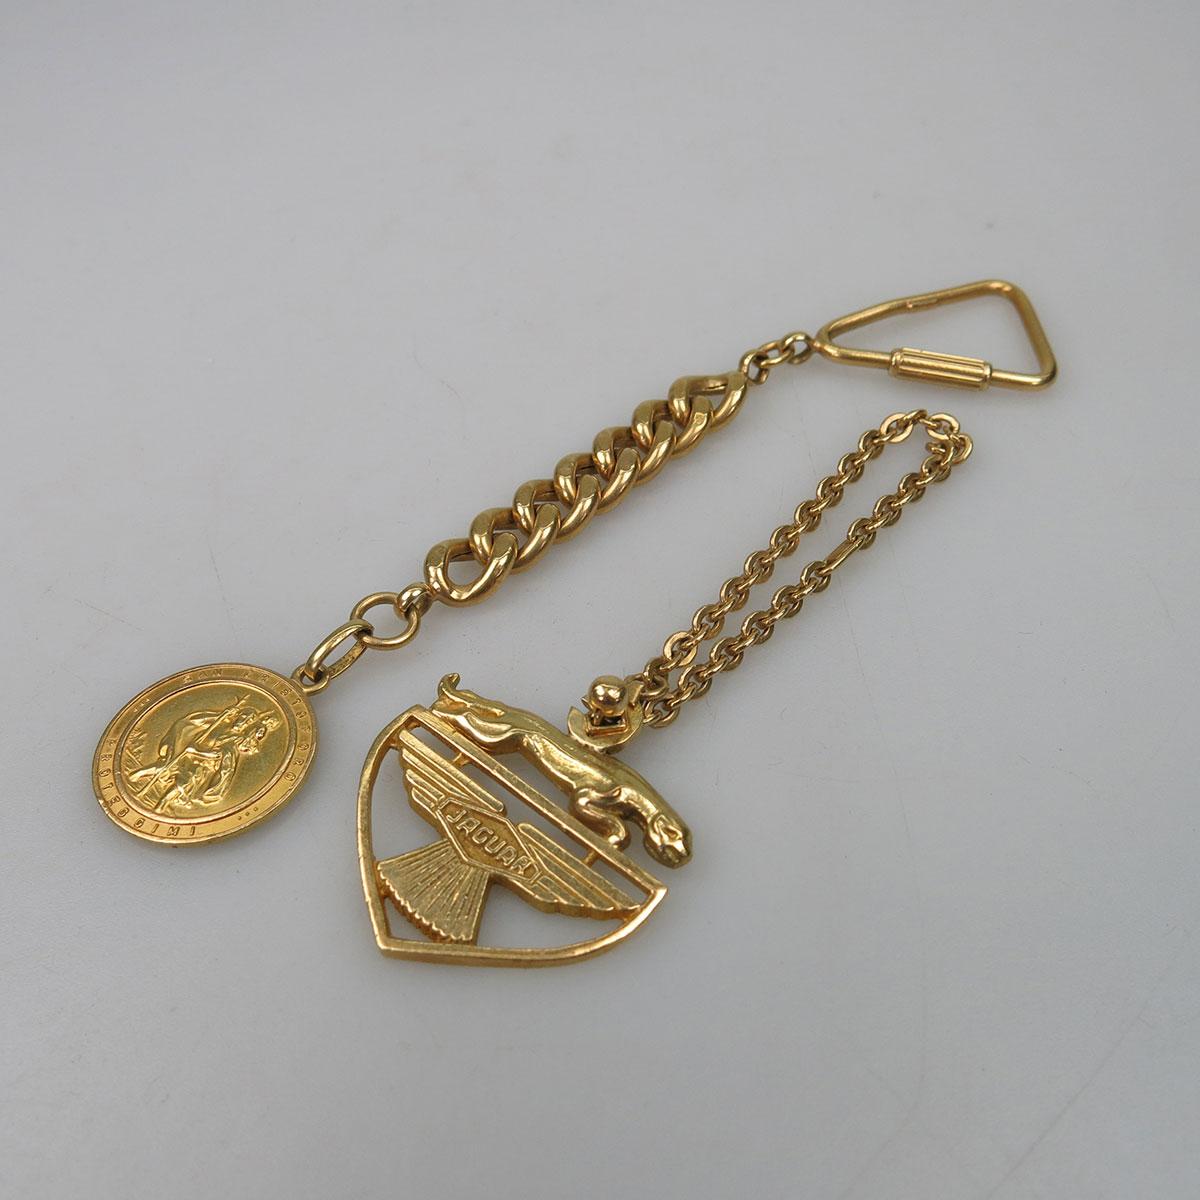 2 x 18k Yellow Gold Keychains